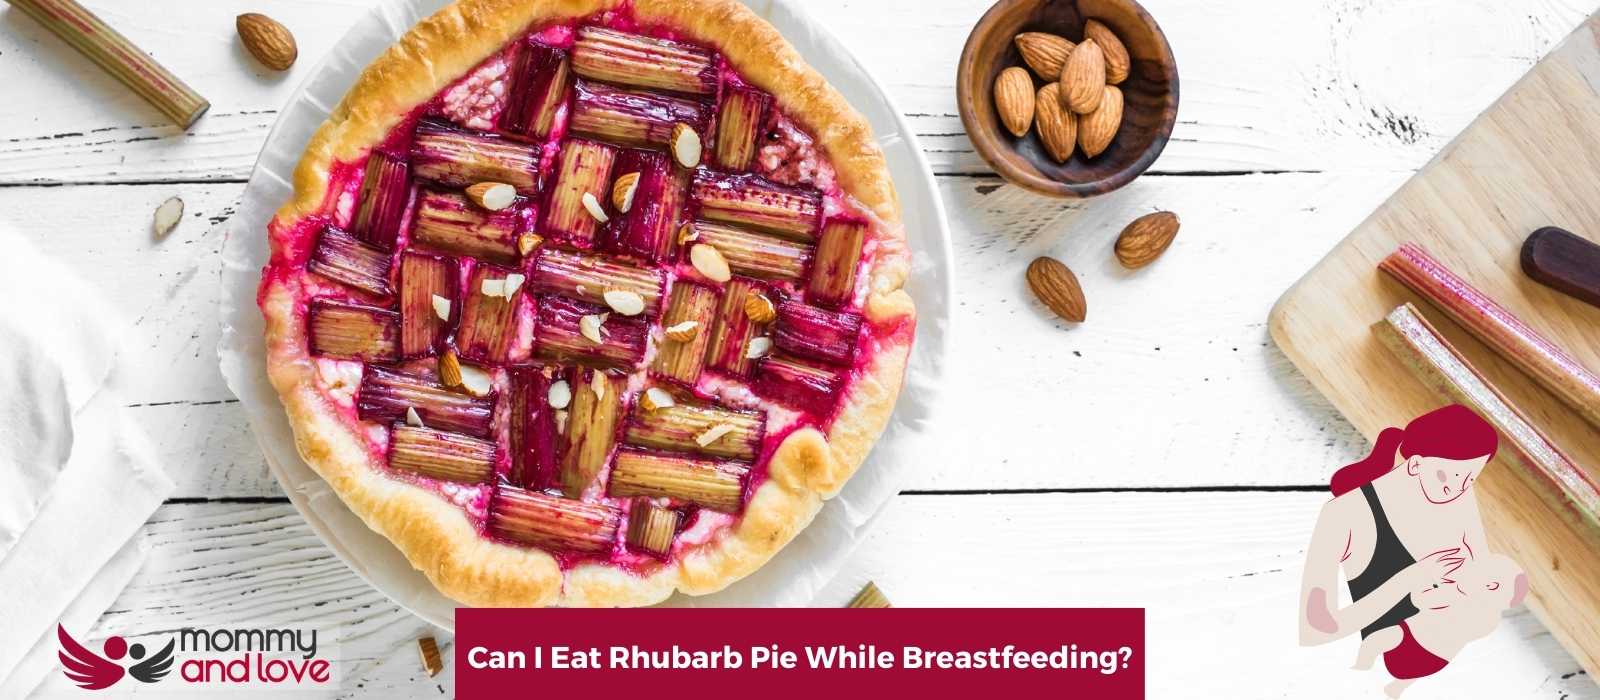 Can I Eat Rhubarb Pie While Breastfeeding